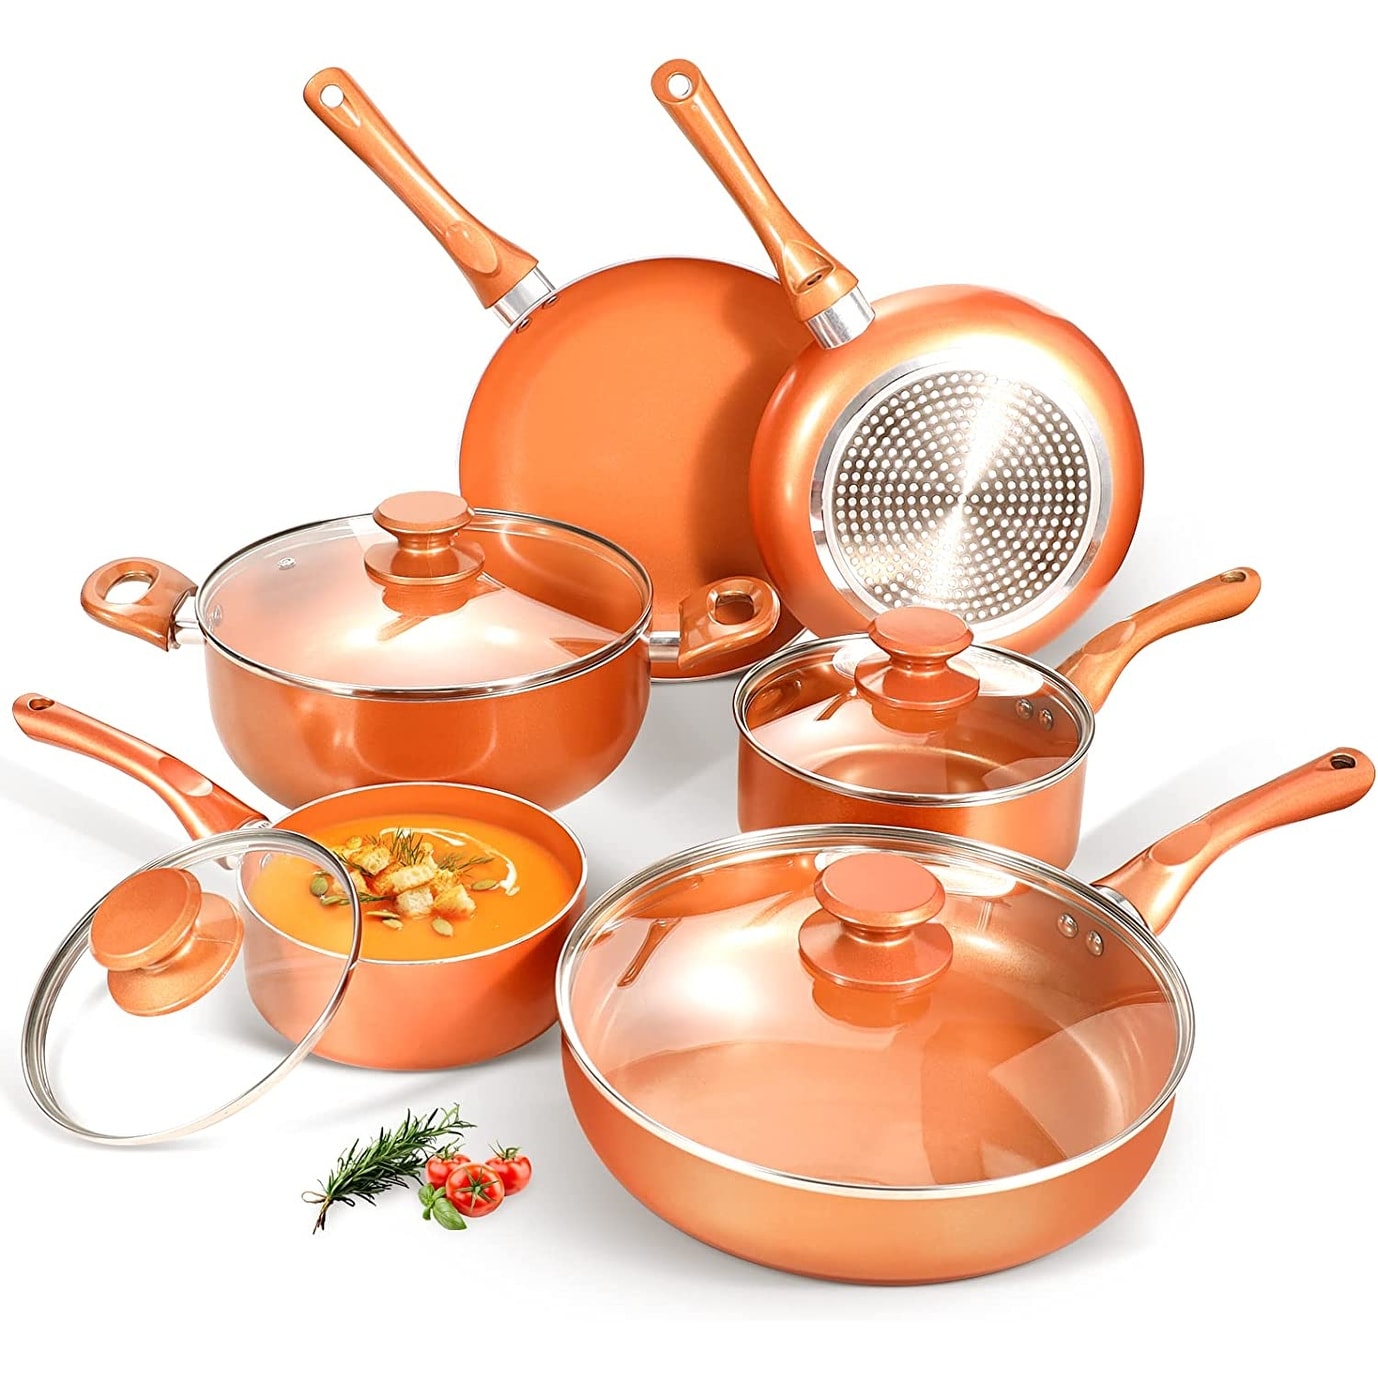 https://ak1.ostkcdn.com/images/products/is/images/direct/f1c72d00871f8ec5e30fb30ae47a0df208b28a74/Pots-and-Pans-Set%2C-Cookware-Set%2C-Copper-Pan-Set%2C-Nonstick-Ceramic-Coating.jpg